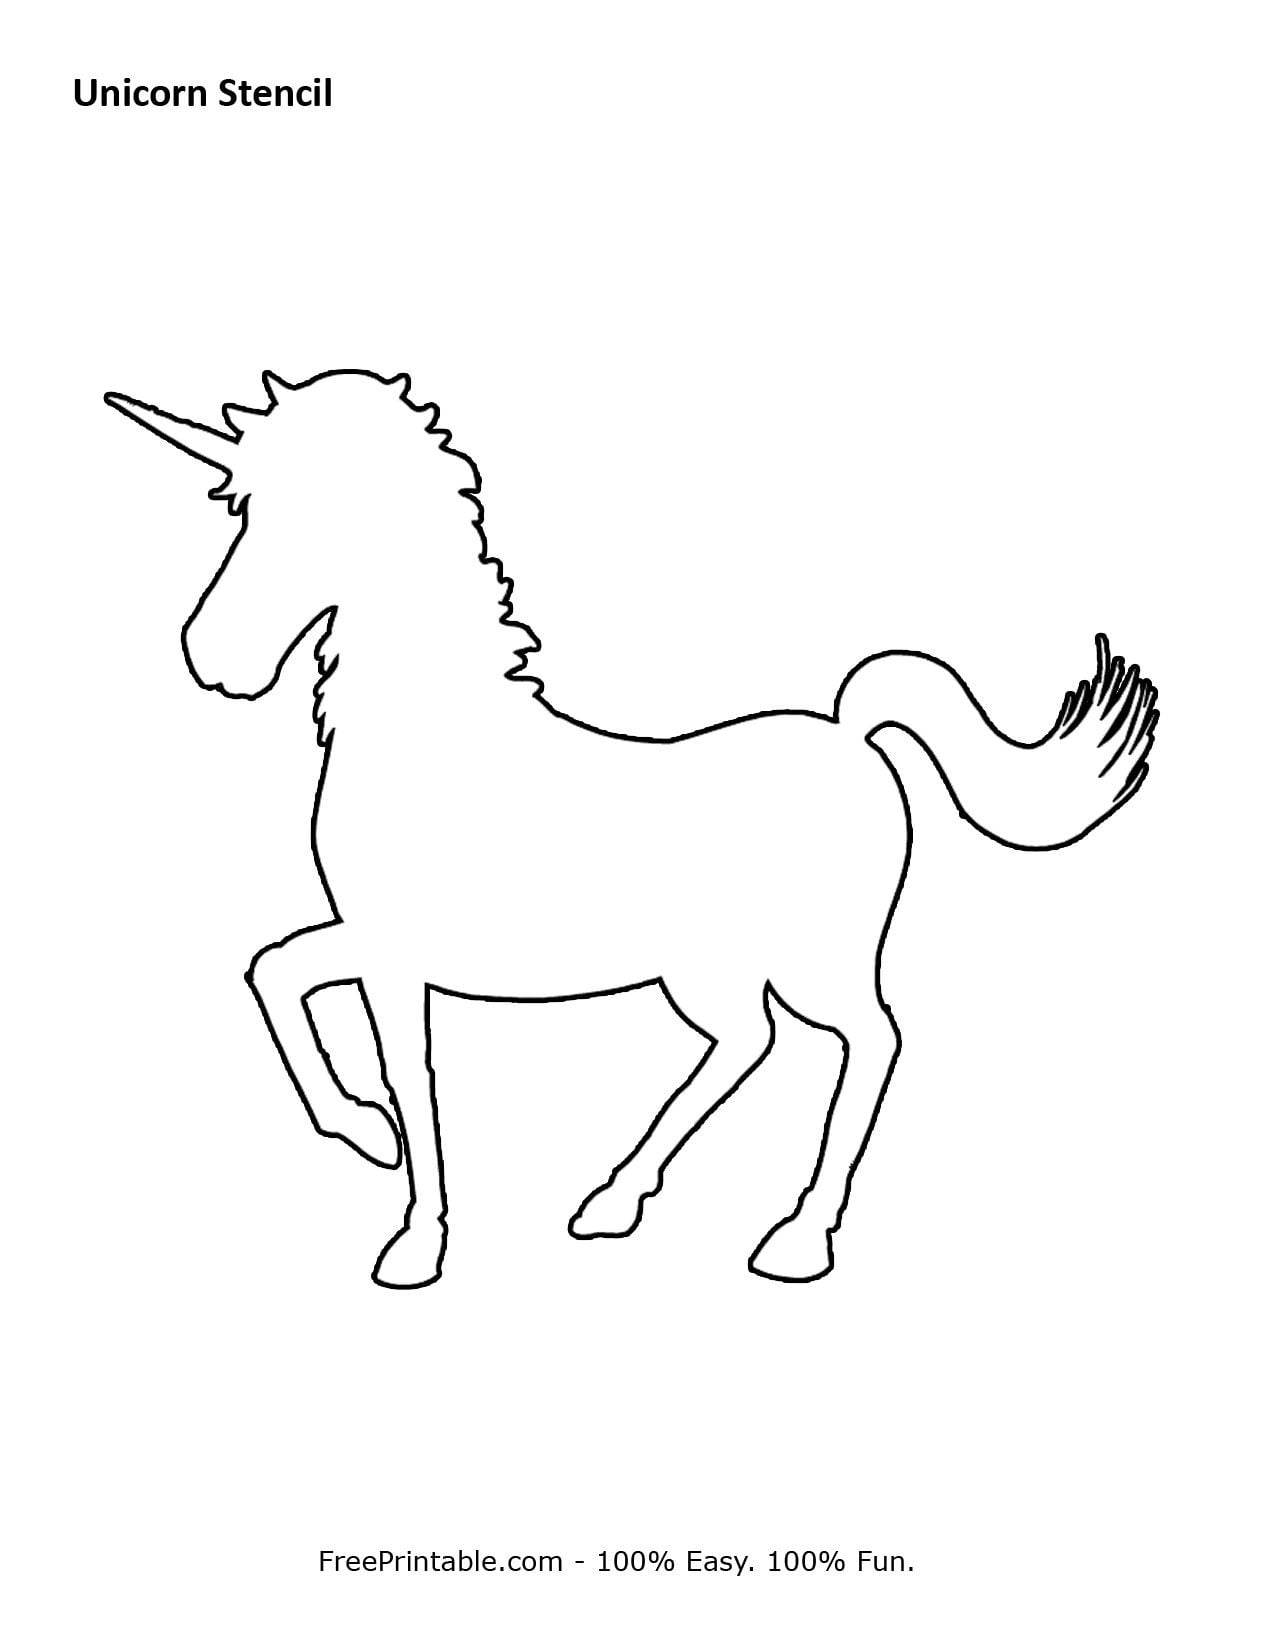 Unicorn Stencil Printable